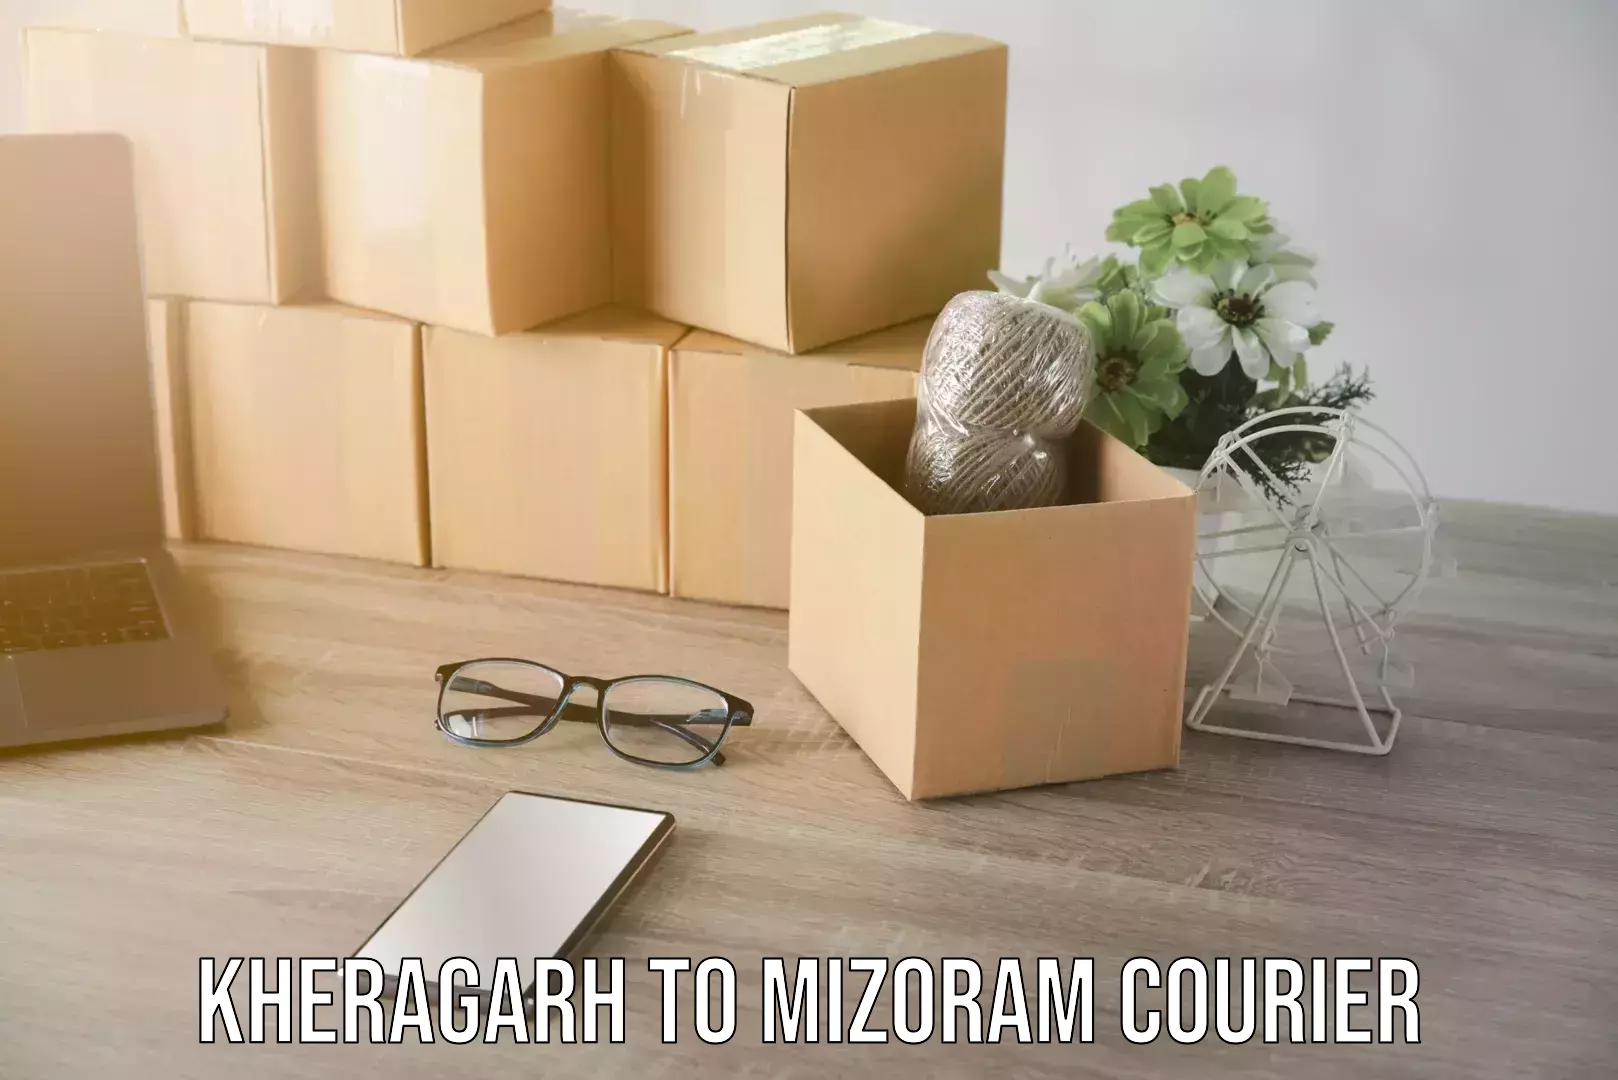 Moving and storage services Kheragarh to Mizoram